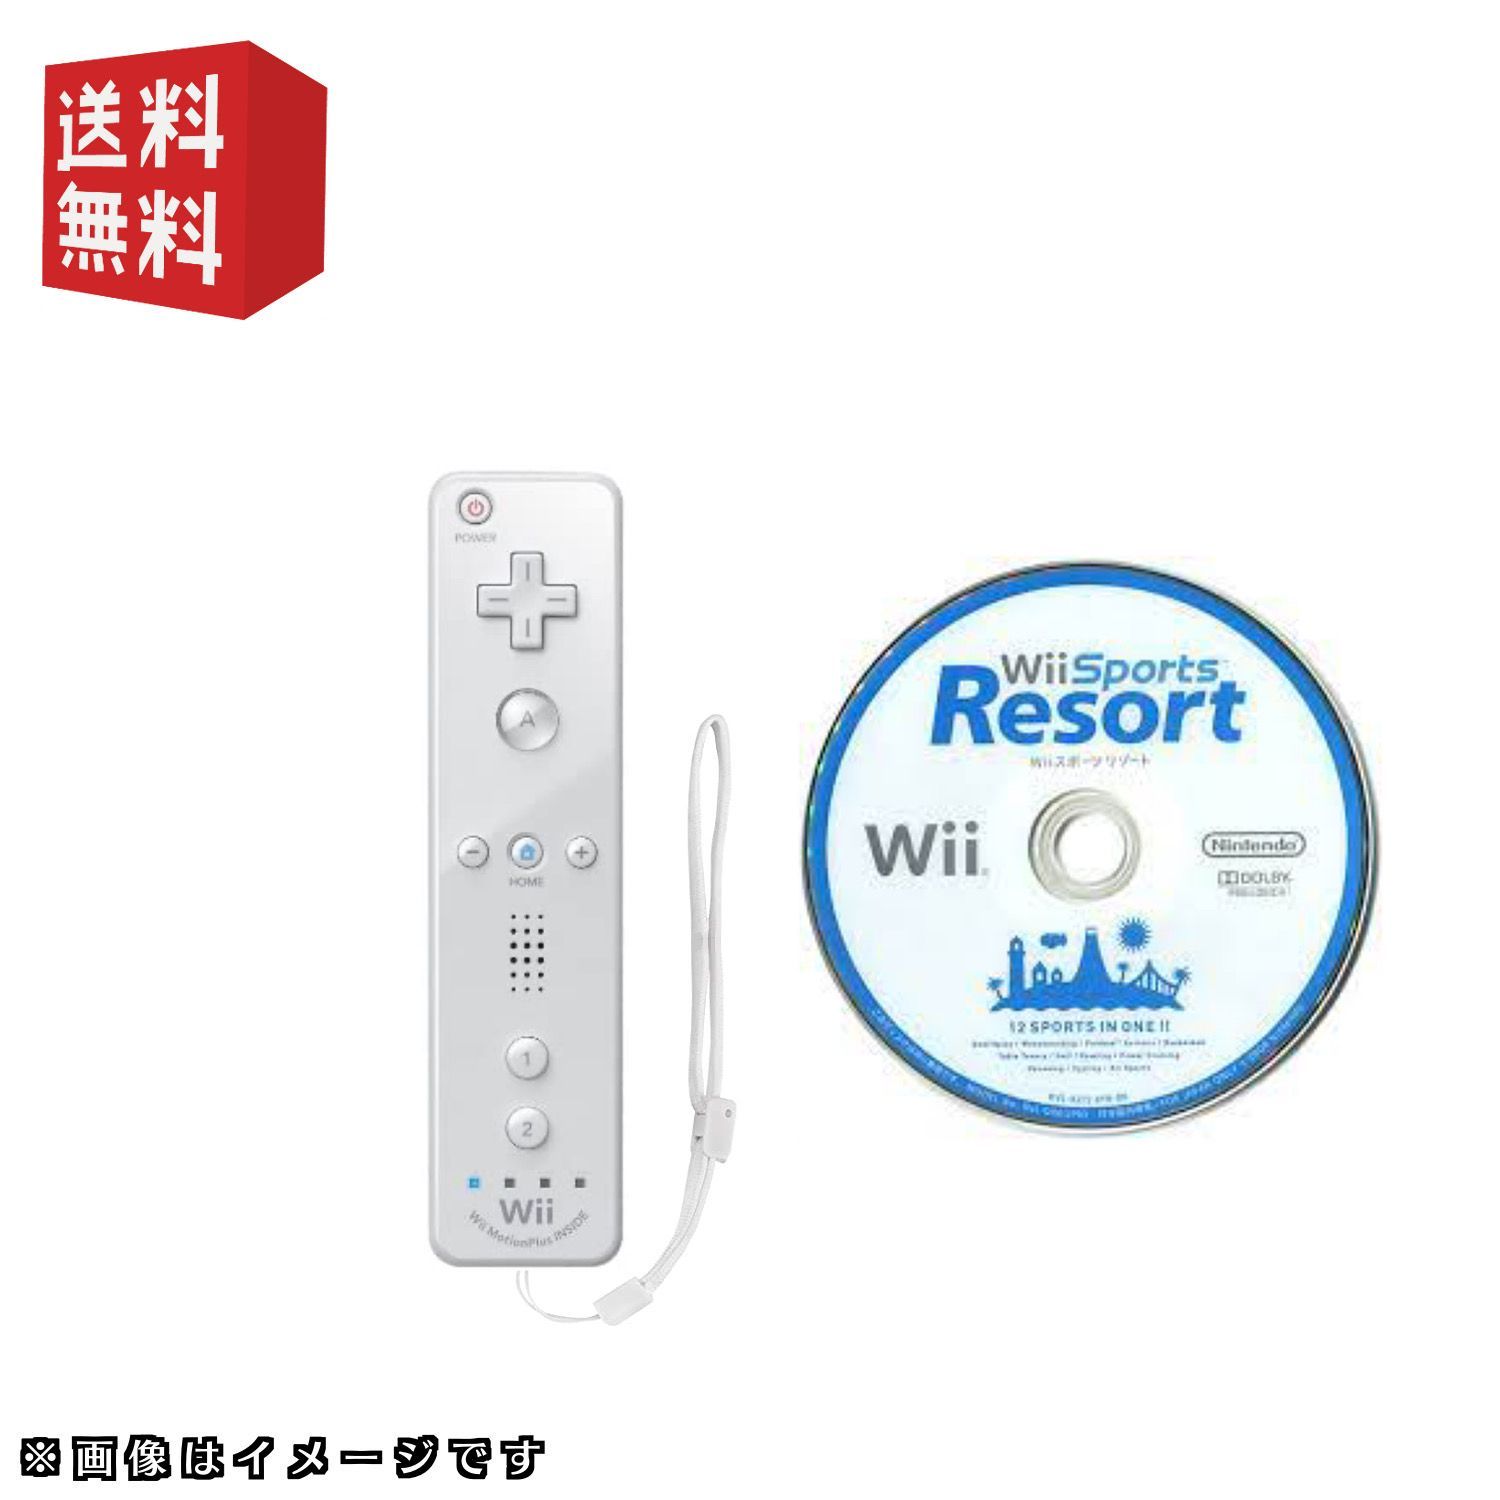 Wii Sports Resort (DVD Case) - Nintendo Wii / Wii U - PAL - Free